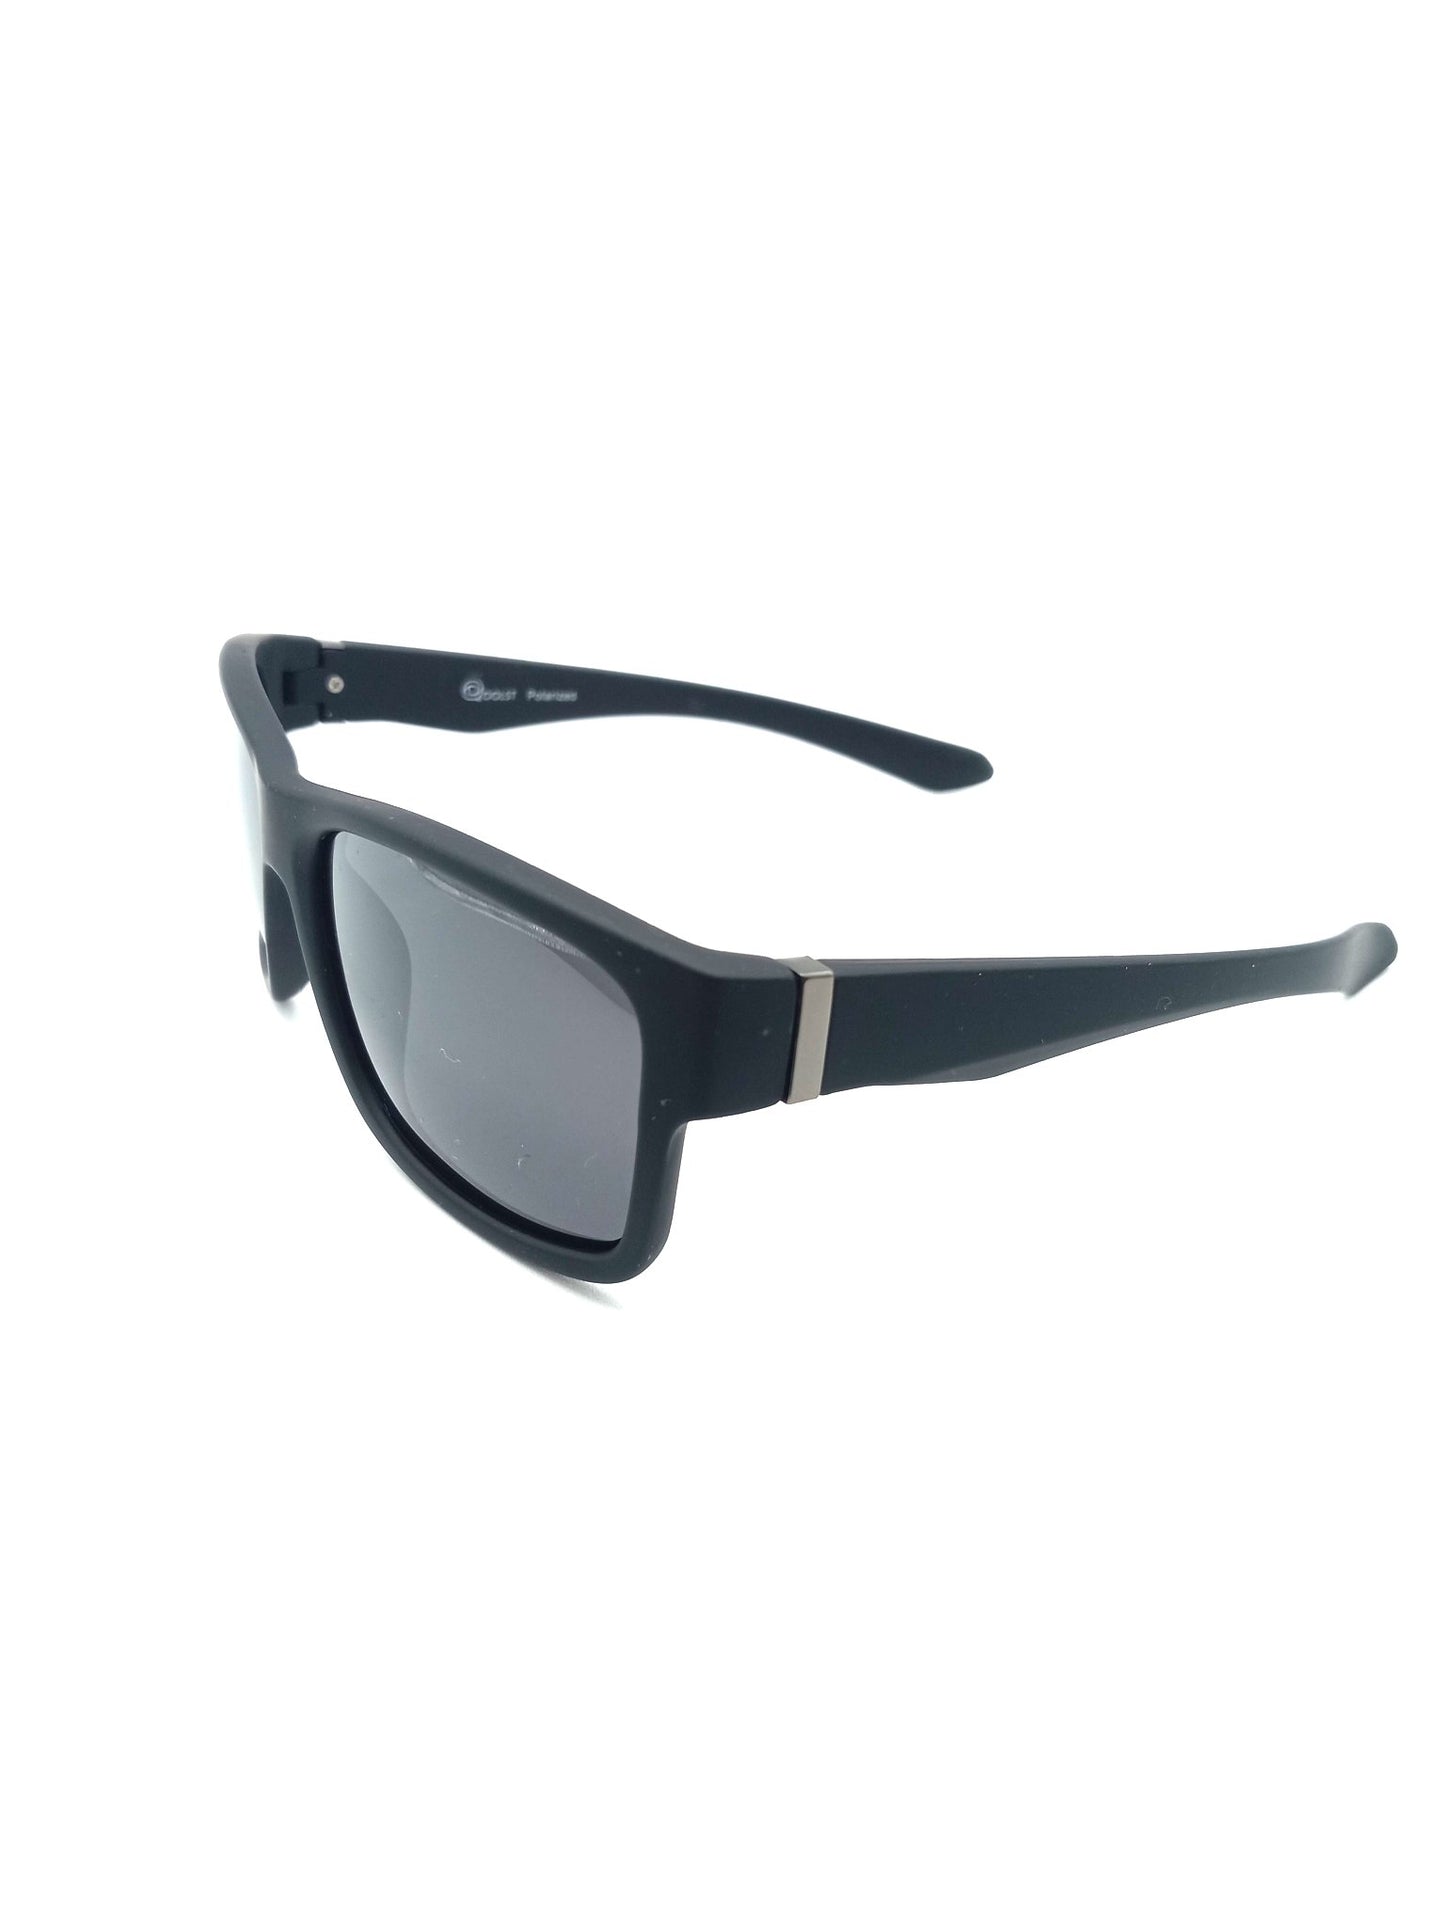 Polarized sunglasses for women and men Typhoon Spain Qoolst